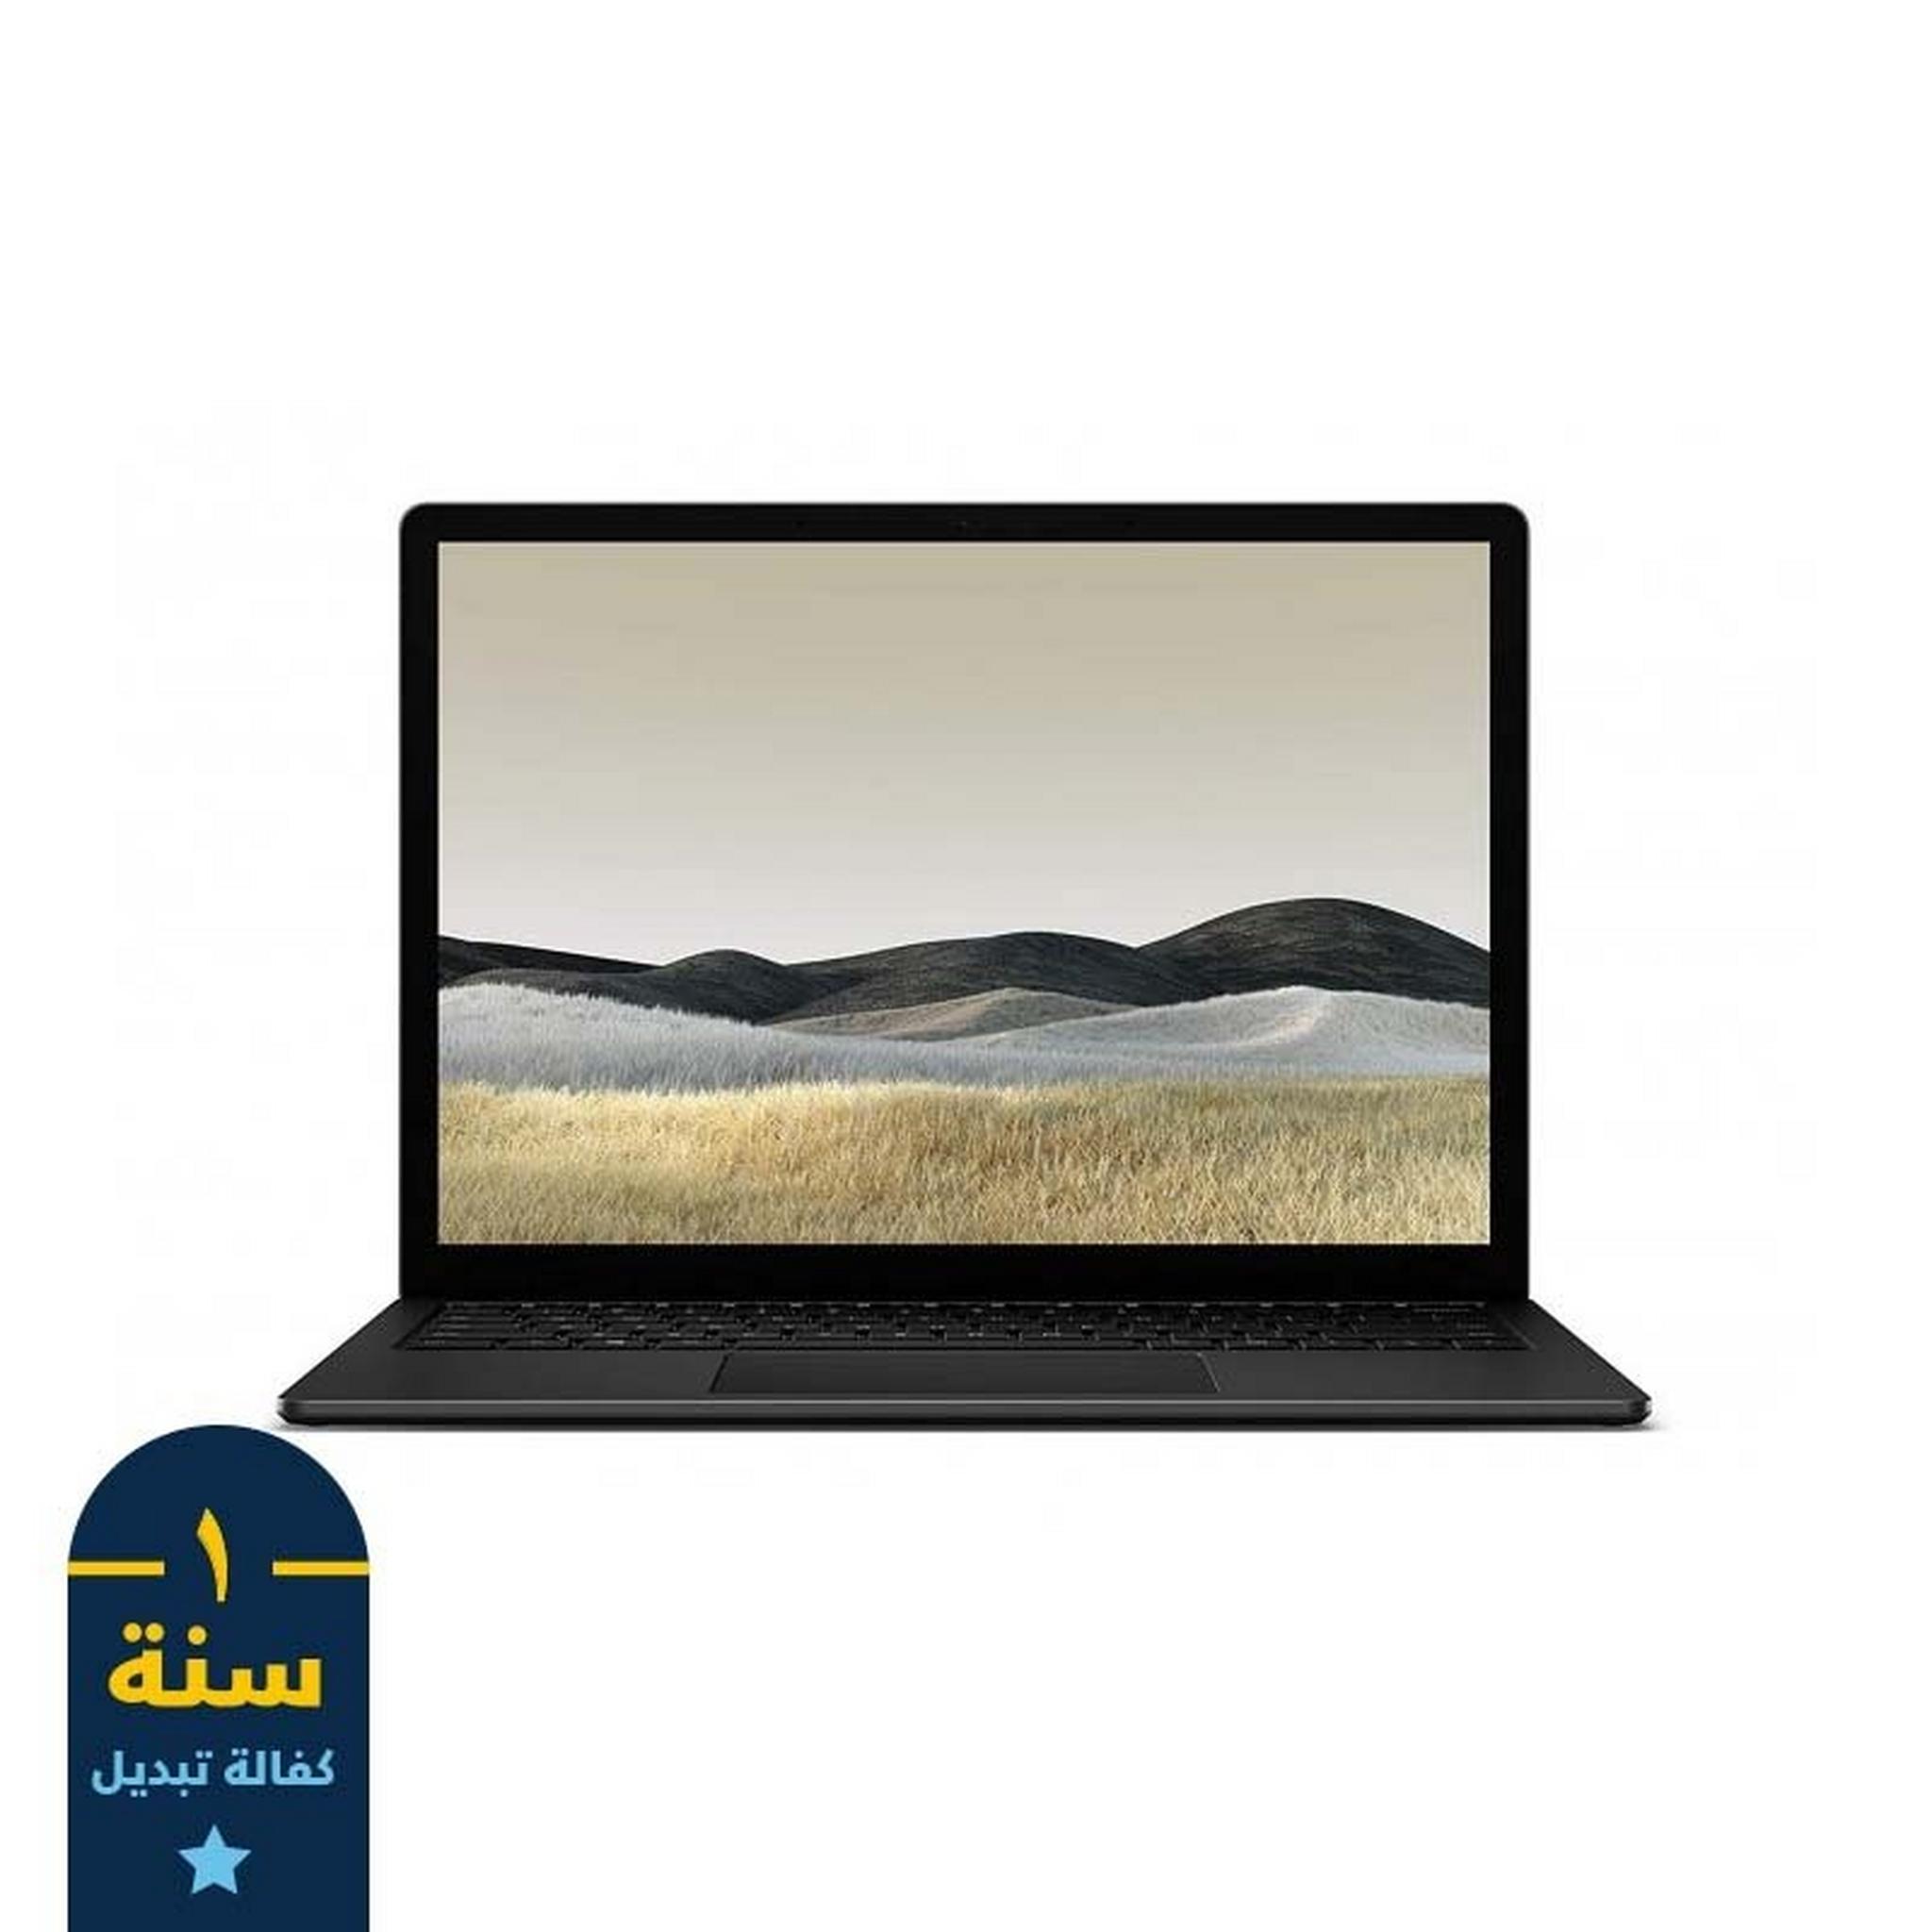 Microsoft Surface Laptop 3AMD Ryzen R5-3580U 8GB RAM 256GB SSD 15-inch Laptop - Black